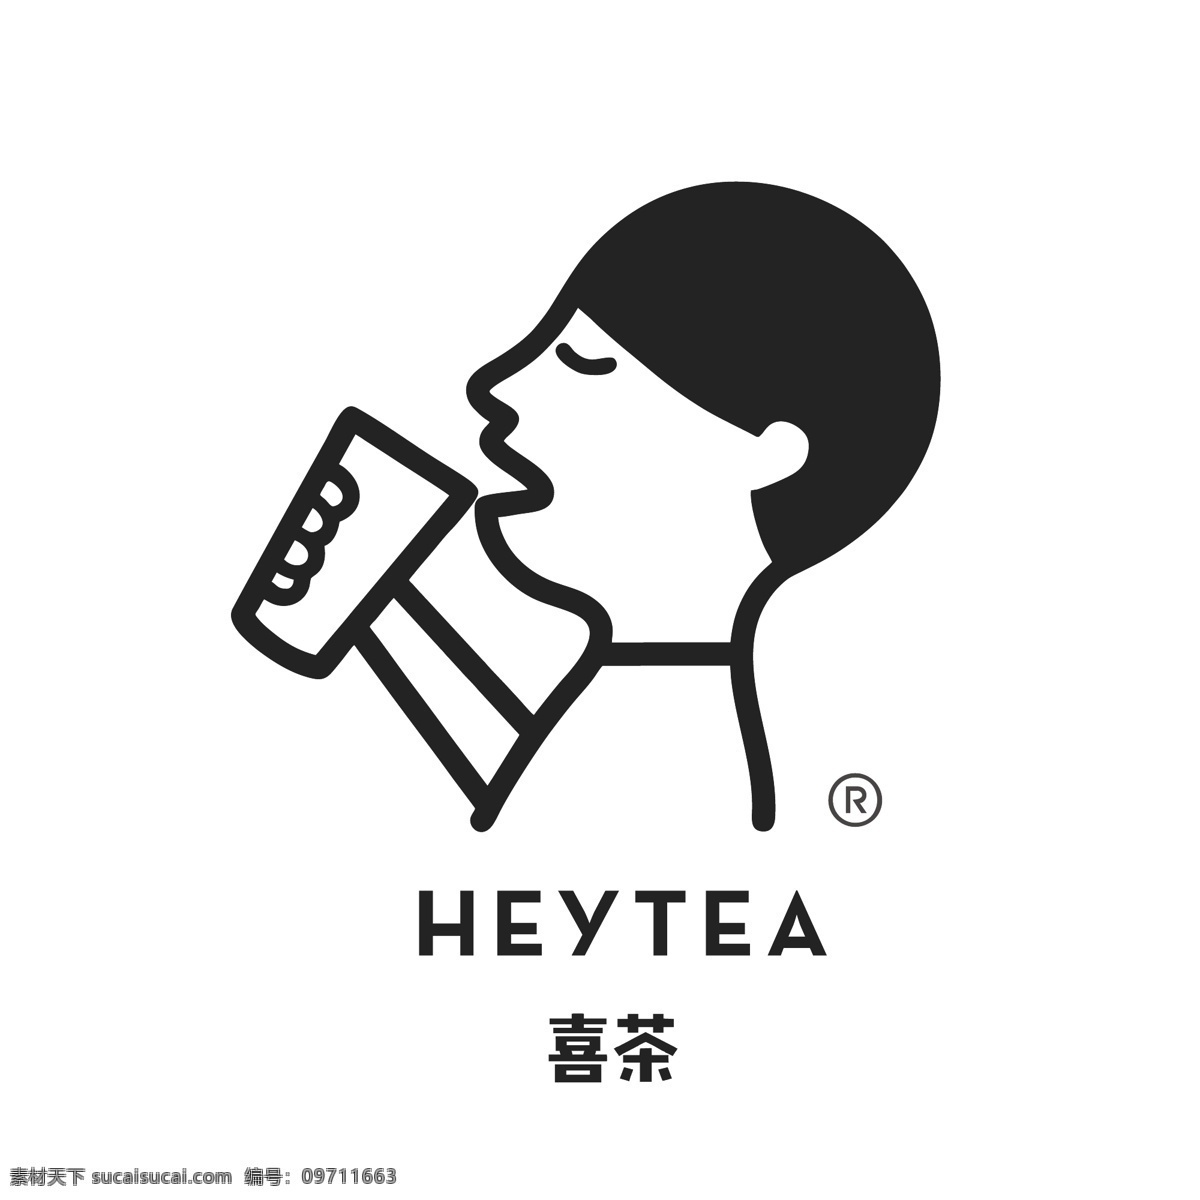 heytea 喜 茶 标志 喜茶logo 标志矢量图 喜茶 茶饮品牌 logo设计